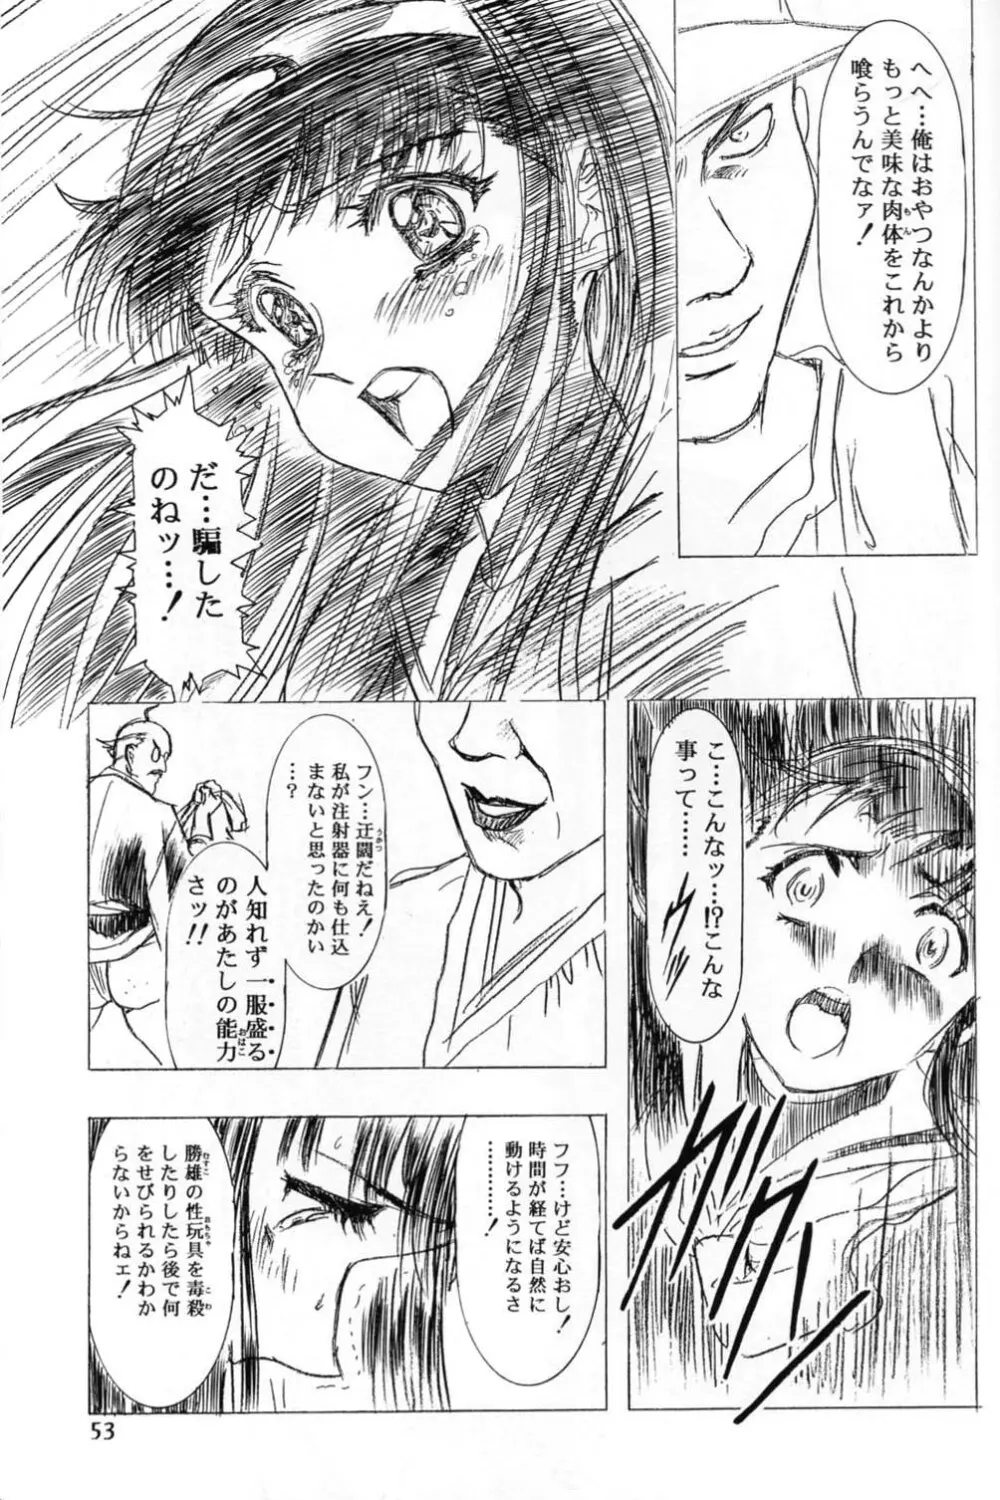 Sakura Ame 2.5 52ページ